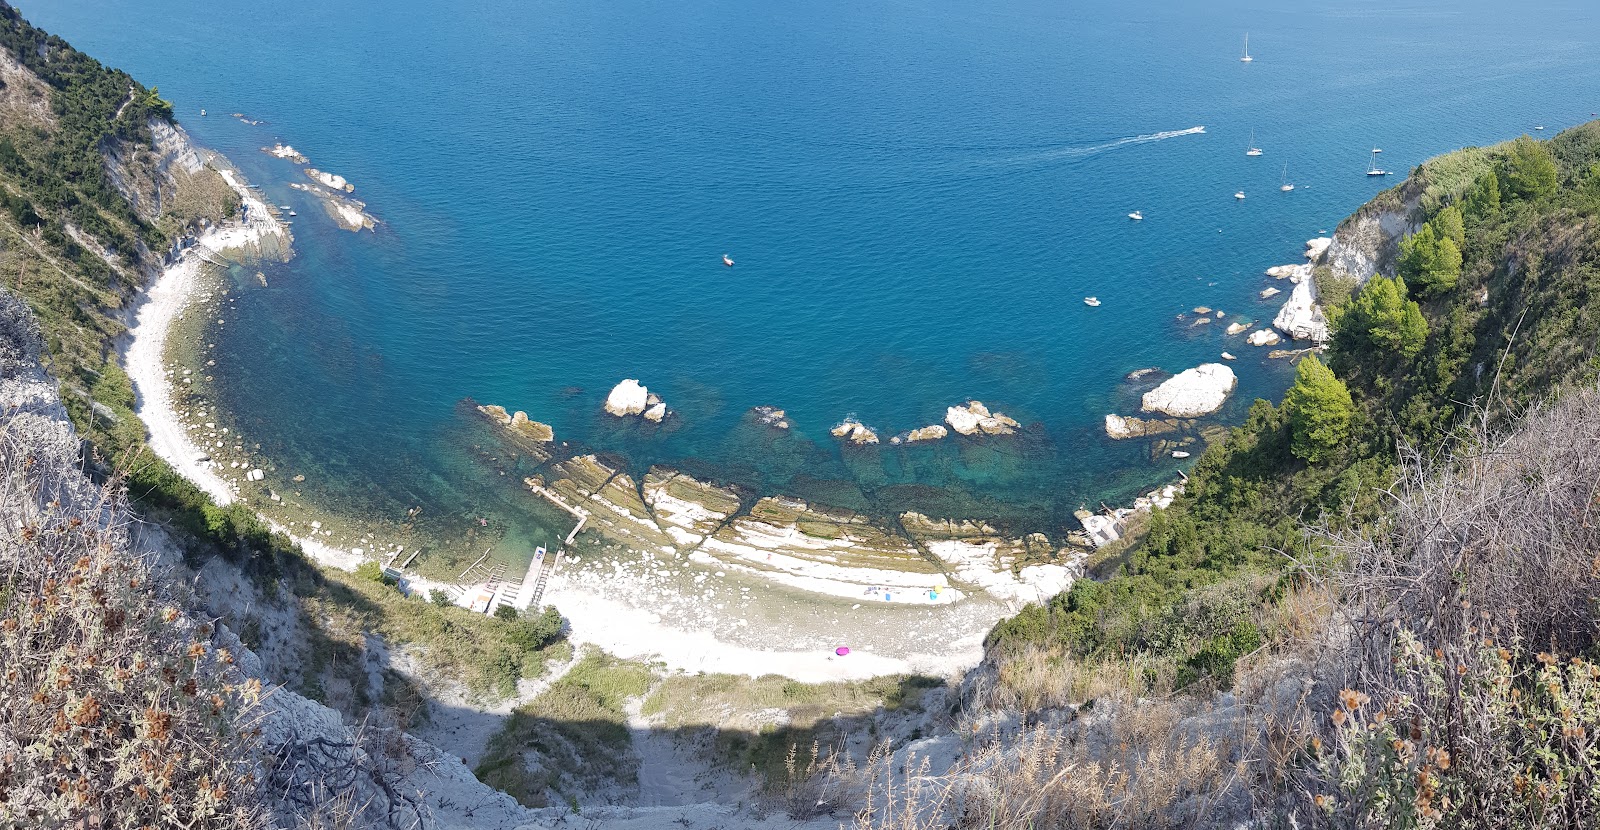 Spiaggia della Scalaccia'in fotoğrafı doğrudan plaj ile birlikte